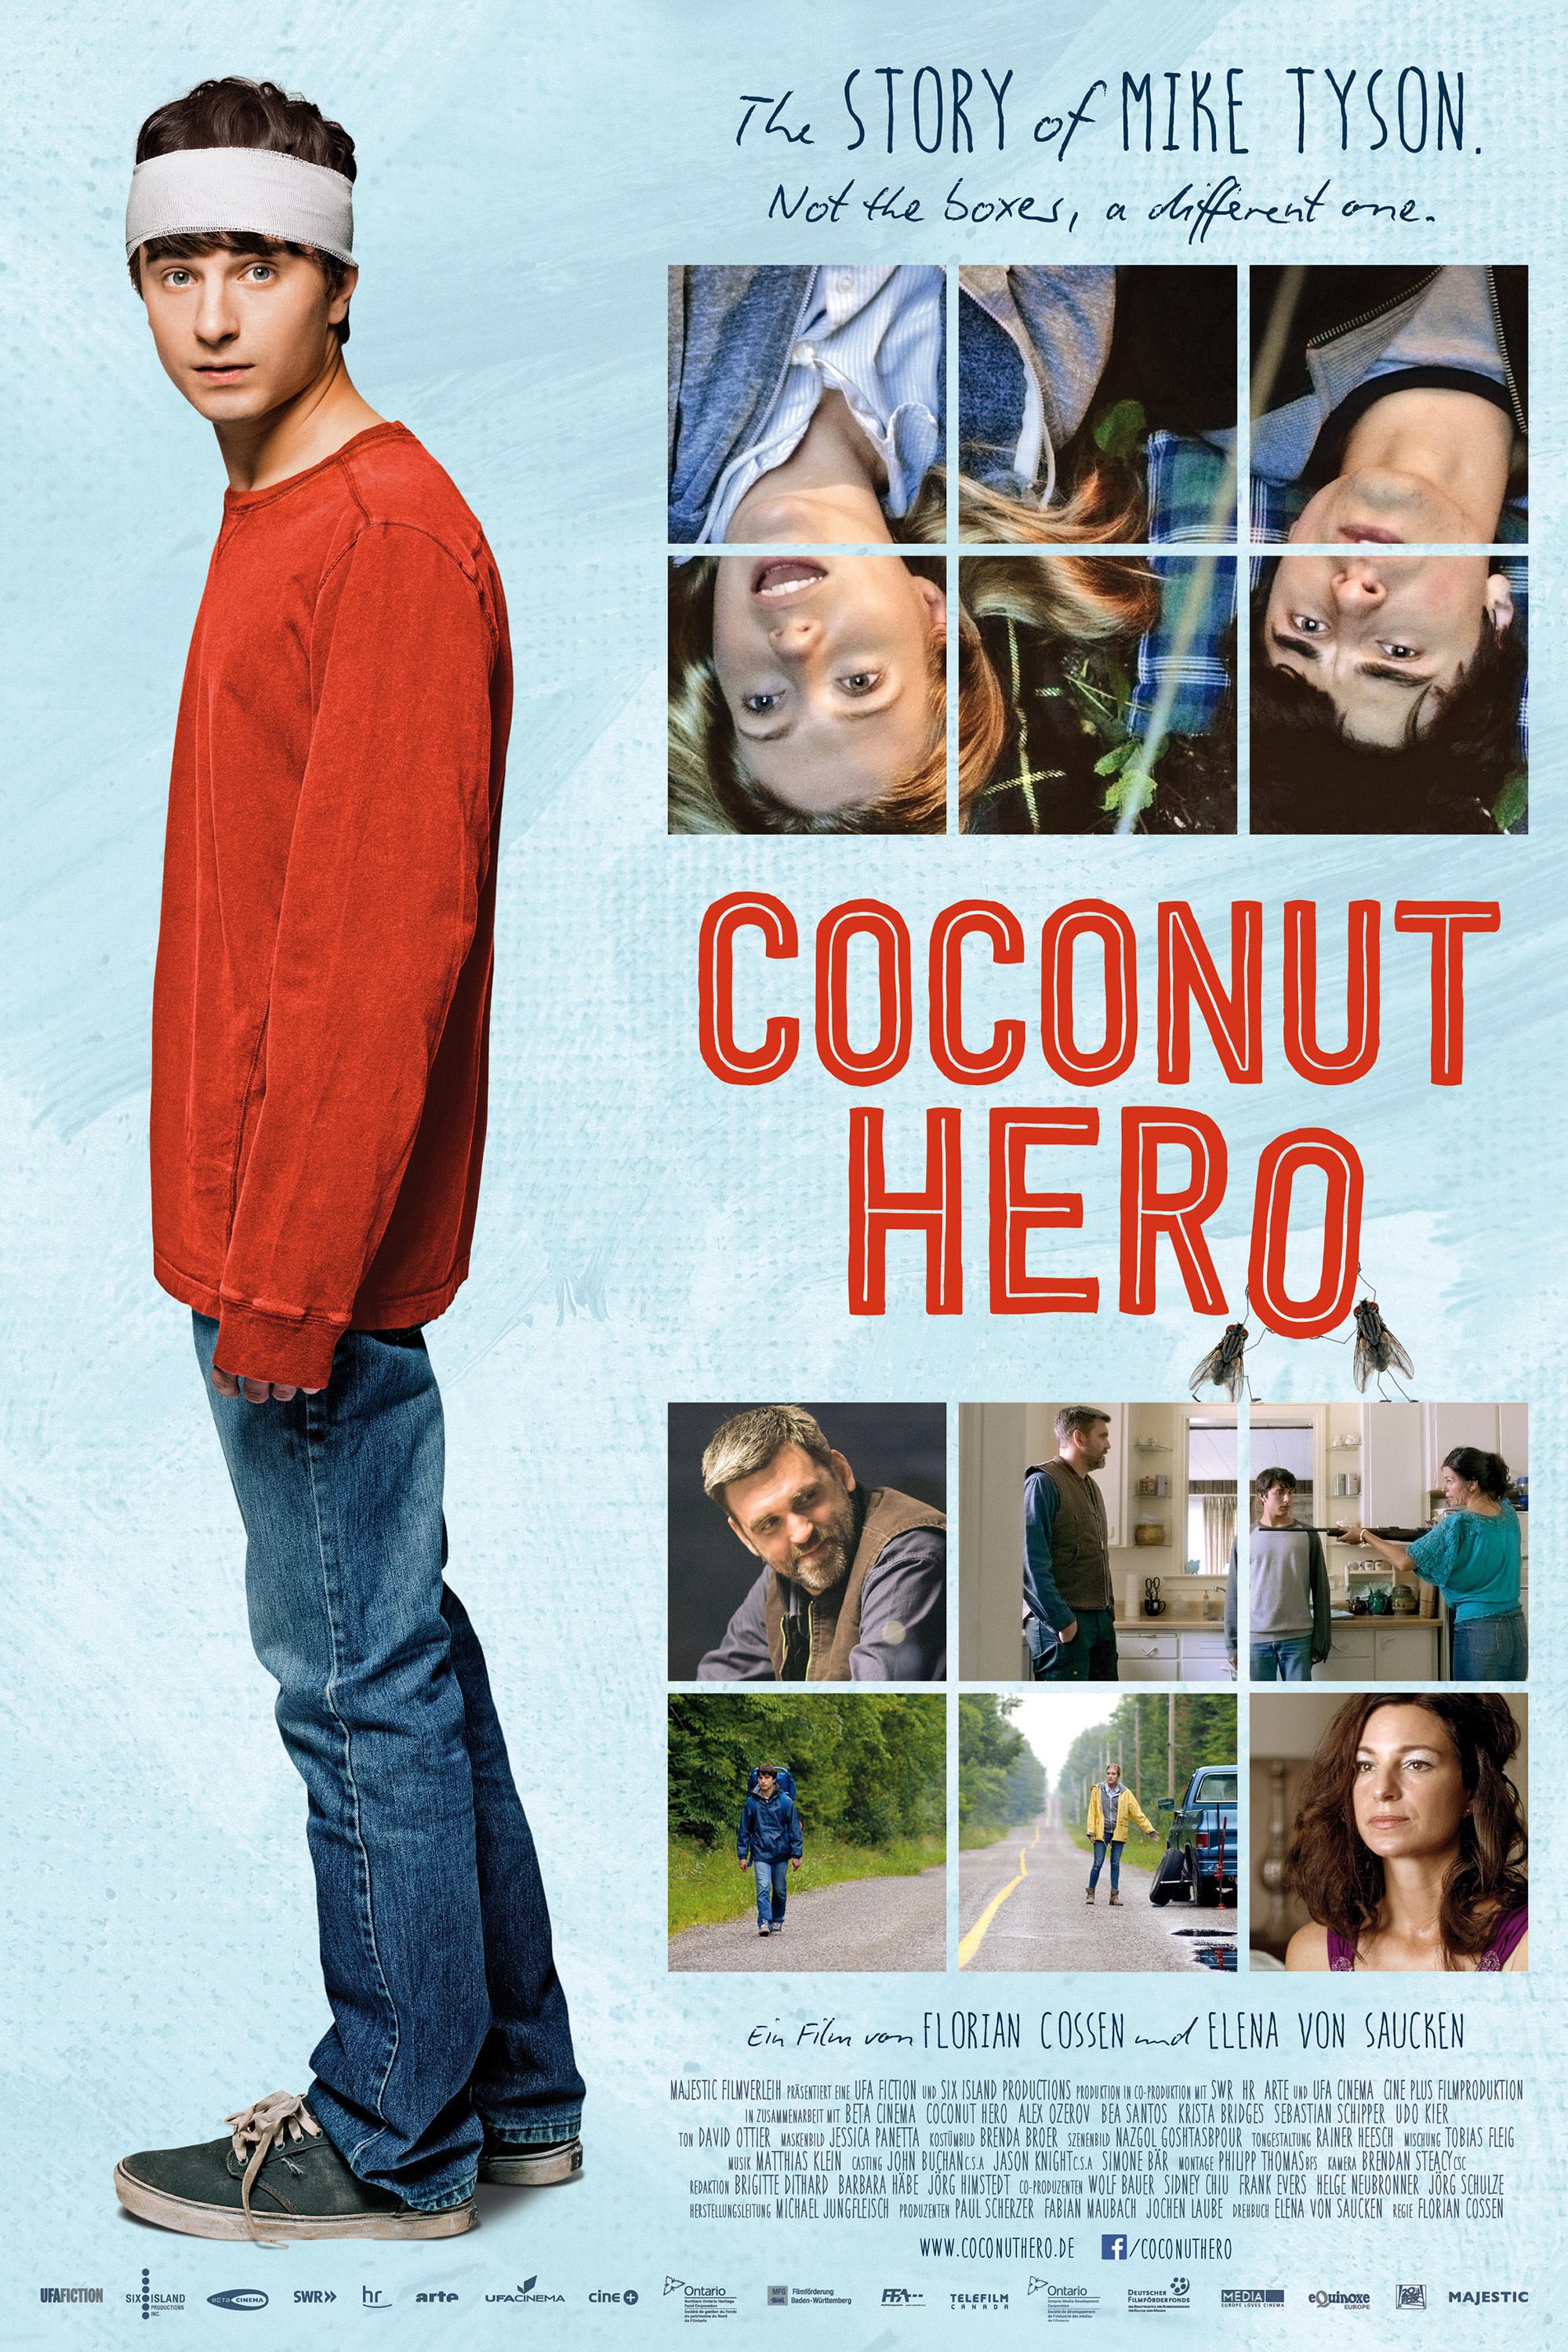 Plakat von "Coconut Hero"